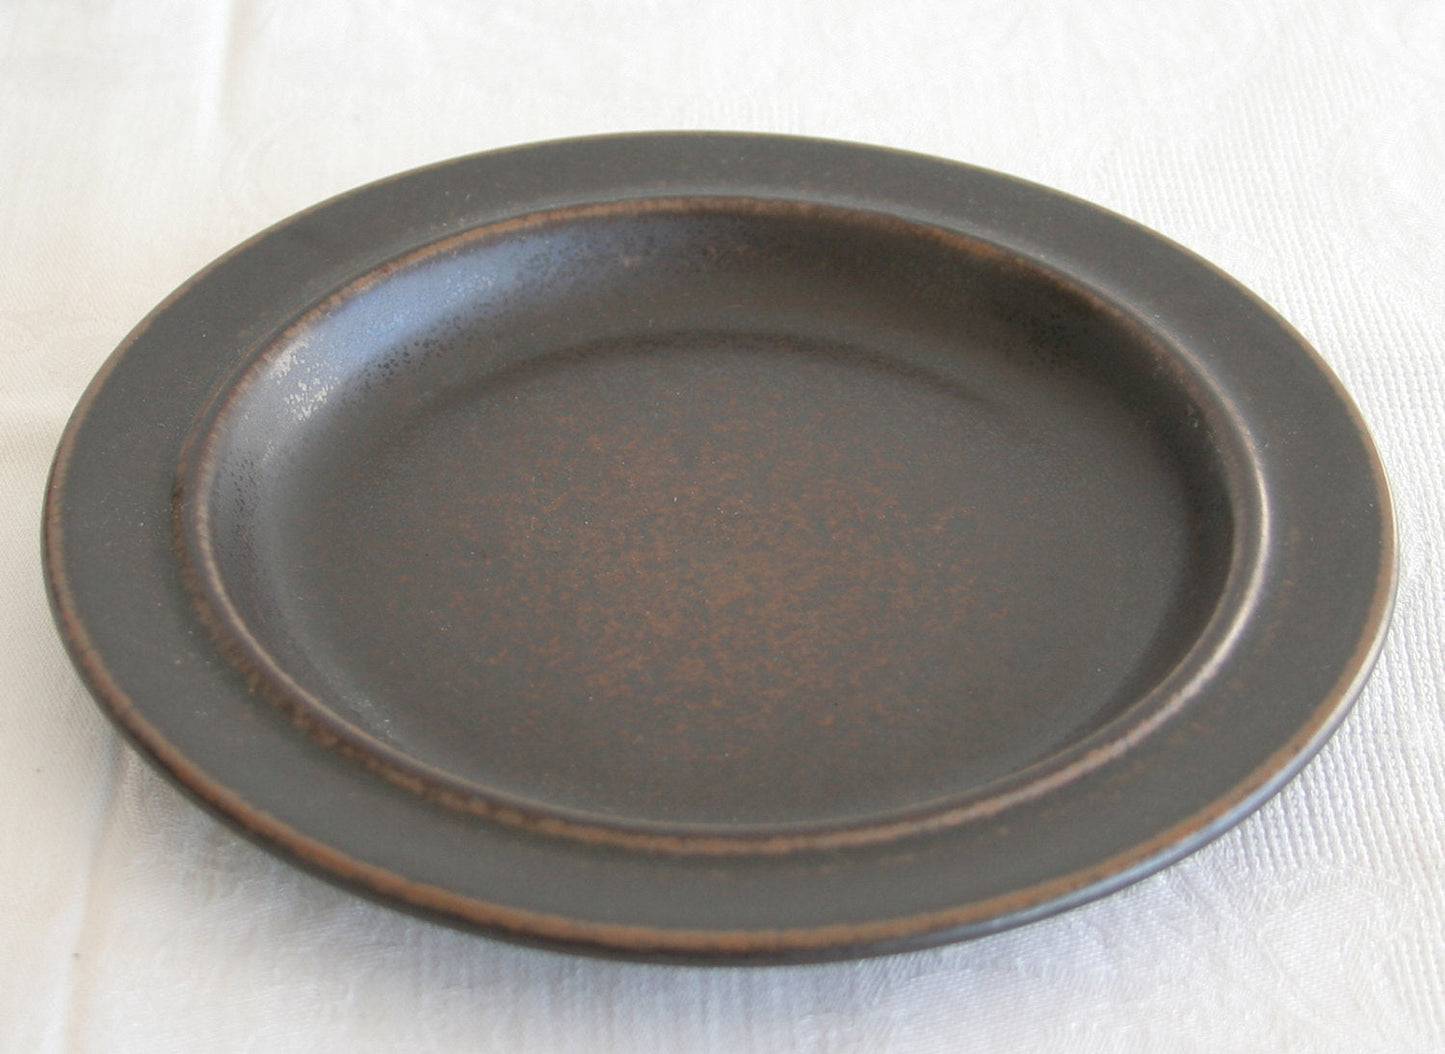 4 x Arabia ULLA PROCOPÉ Tableware RUSKA Stoneware Dinner Plate 25.5cm Mollaris.com 